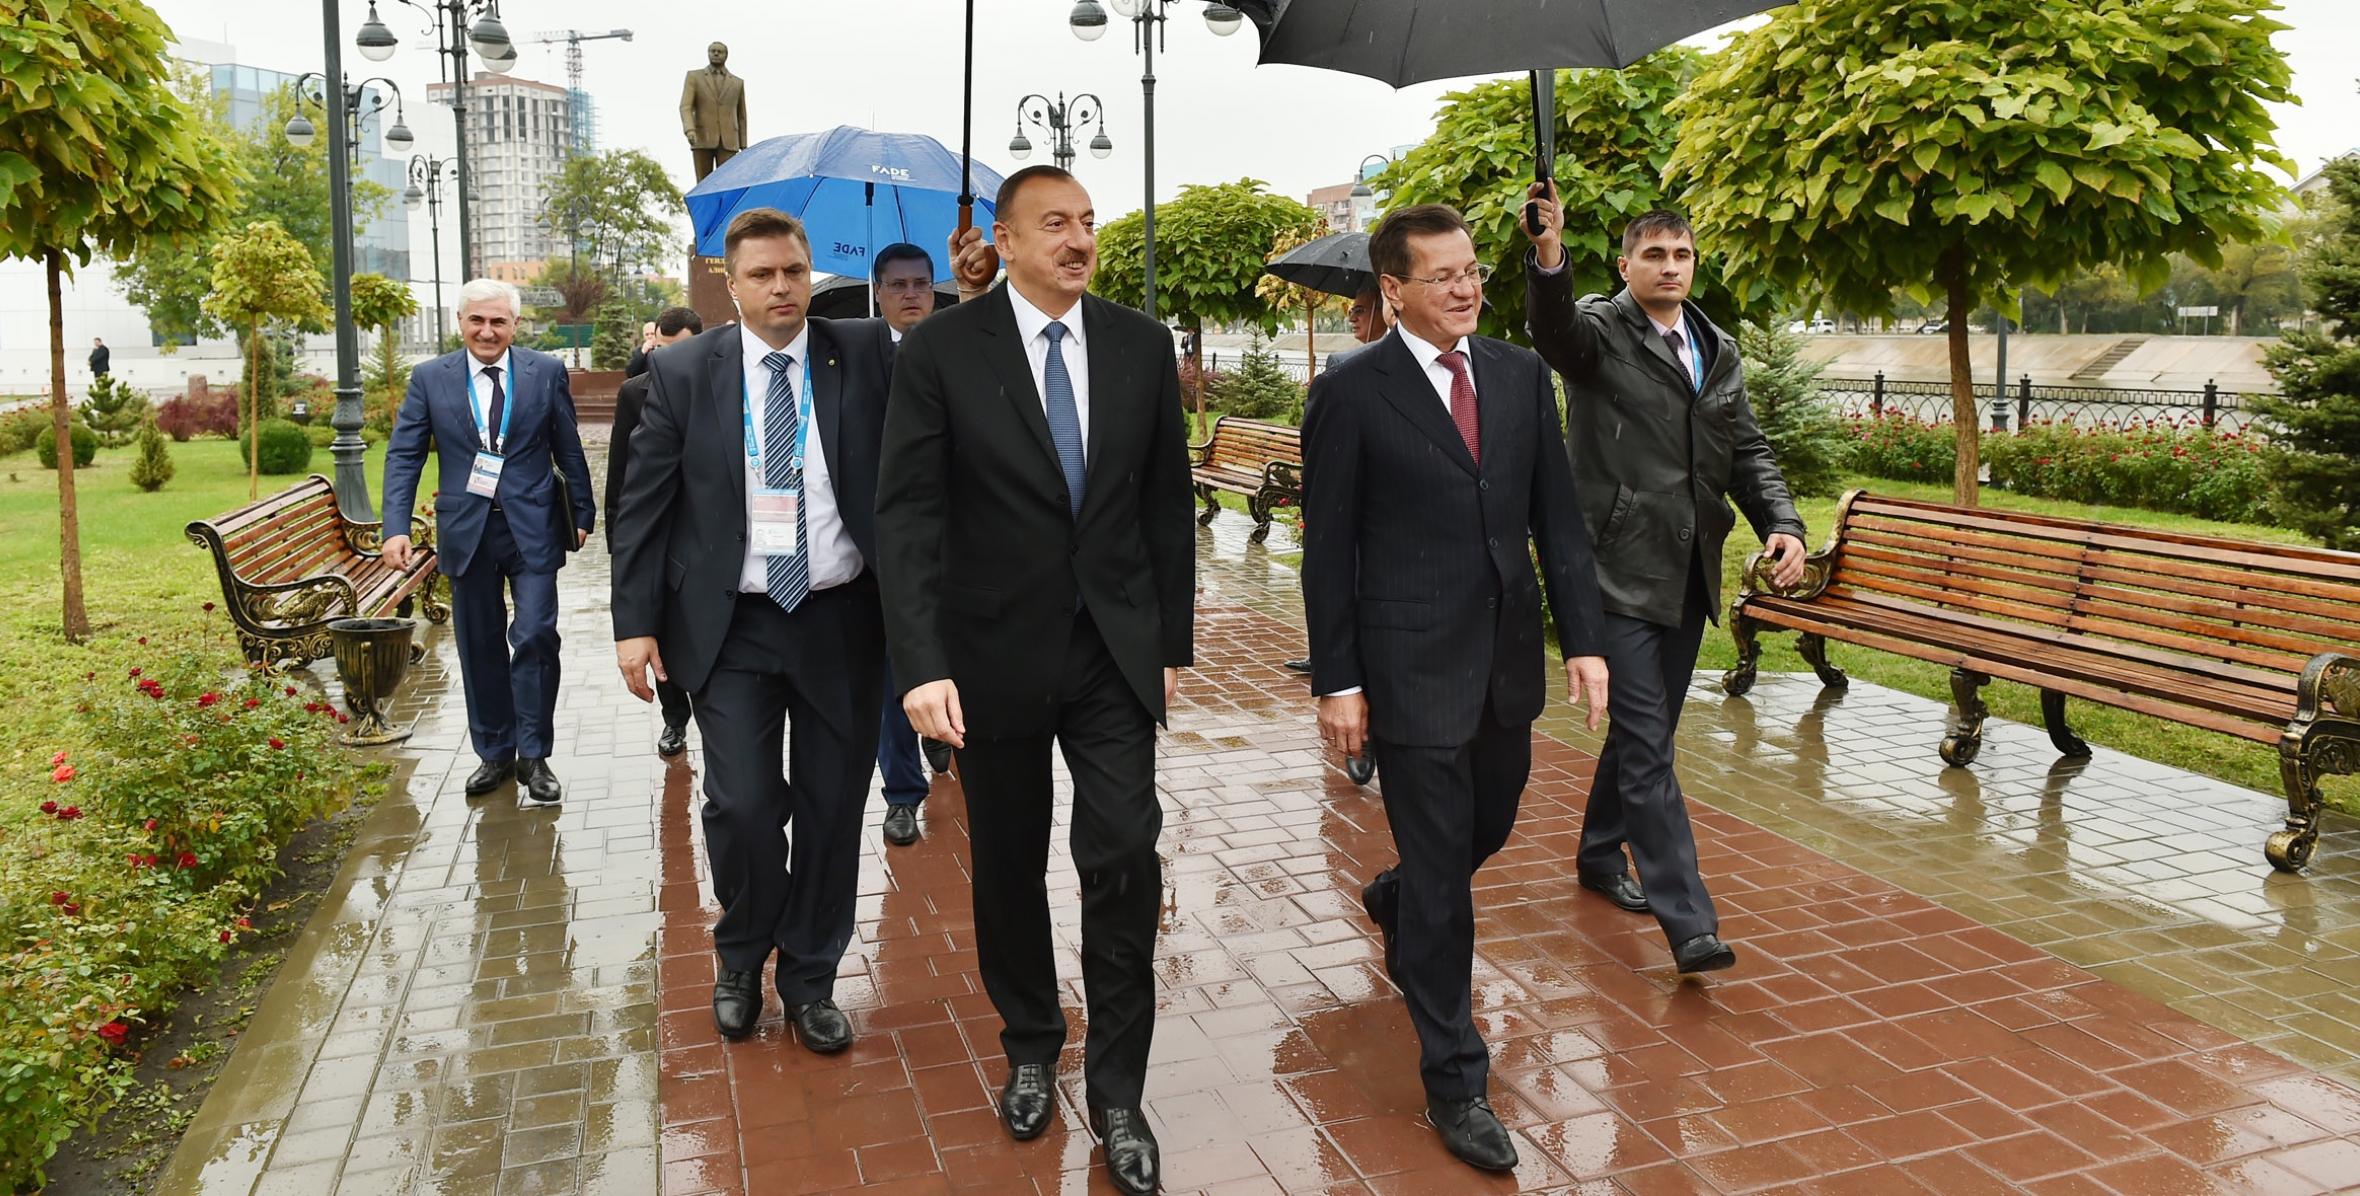 Ilham Aliyev visited the statue of the national leader Heydar Aliyev in Astrakhan